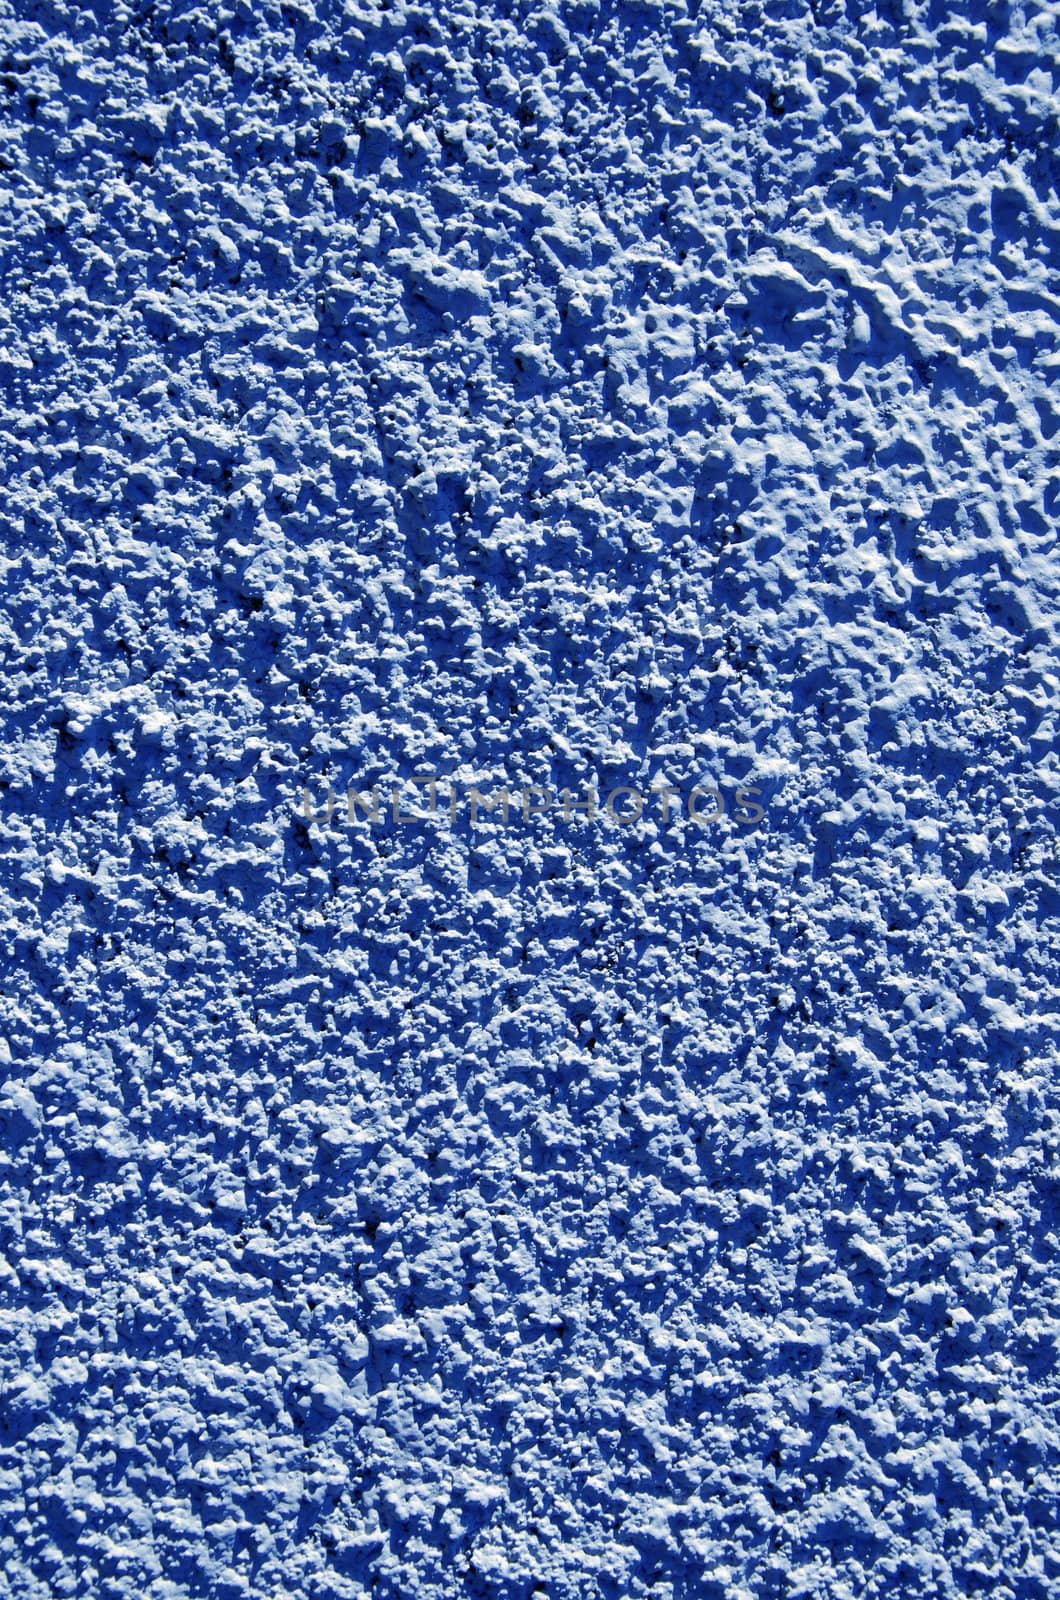 Blue painted textured walls closeup macro details. by sauletas